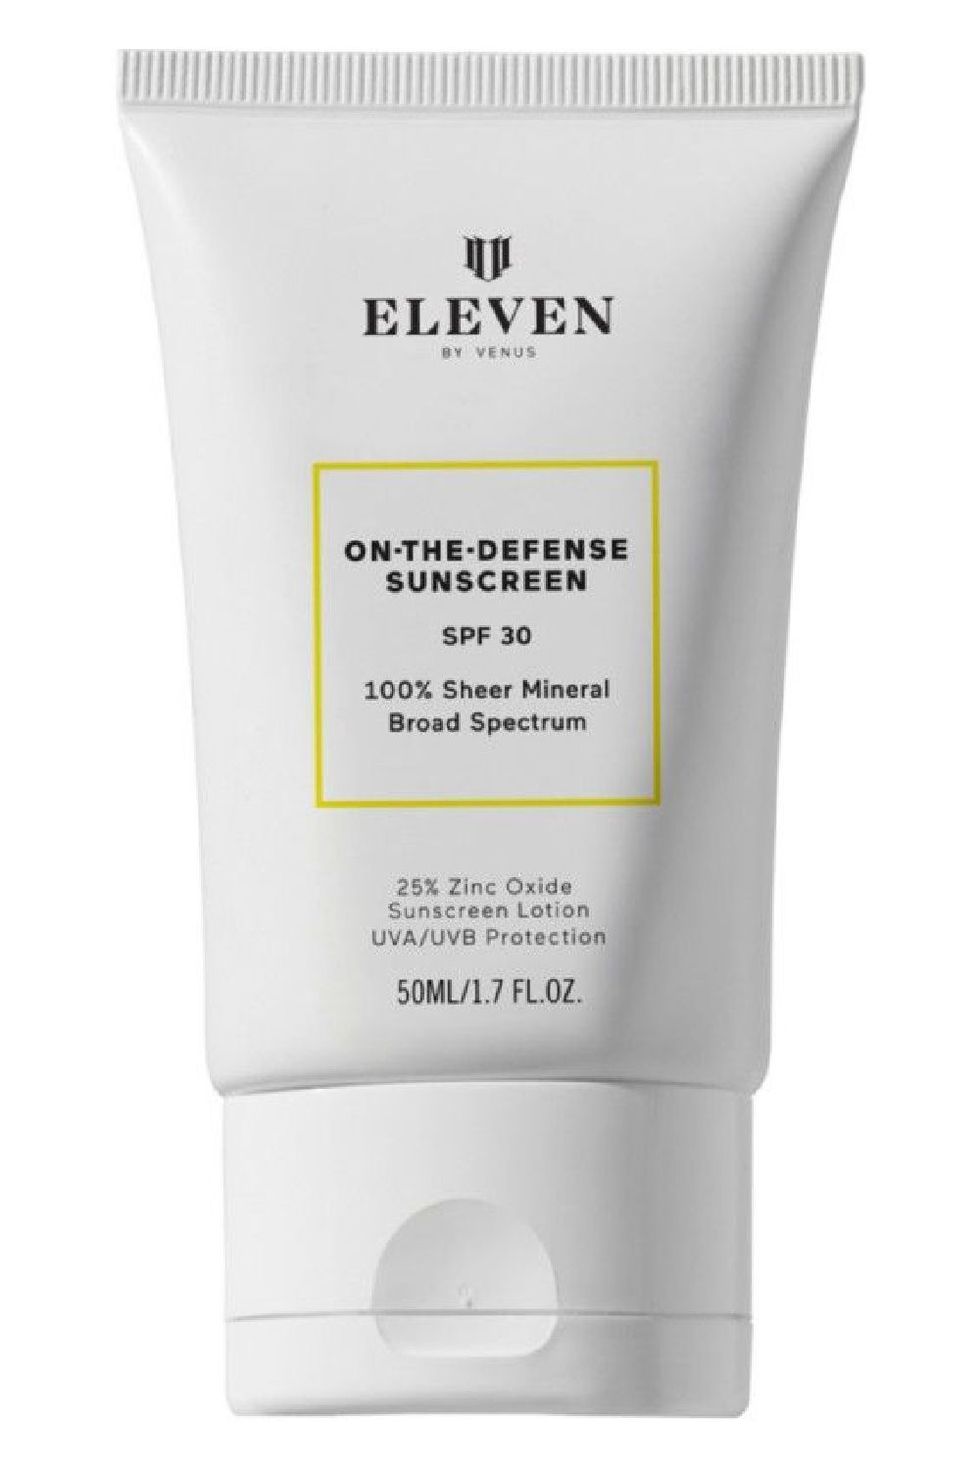 EleVen by Venus Williams On-The-Defense Sunscreen SPF 30